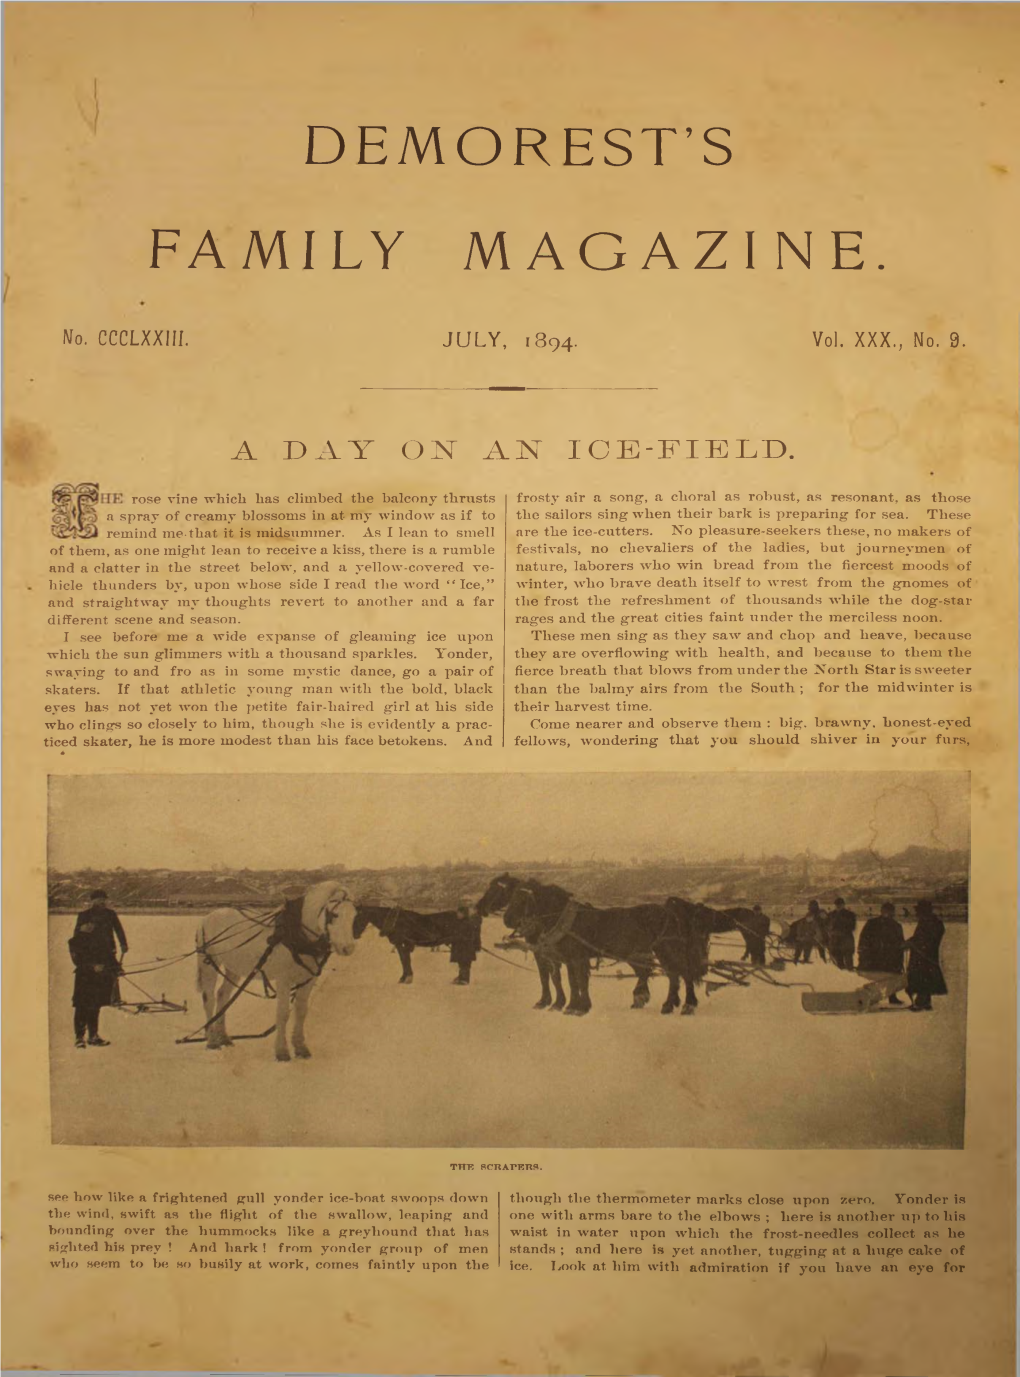 Demorest's Family Magazine. July 1894. Vol. 30, No. 9